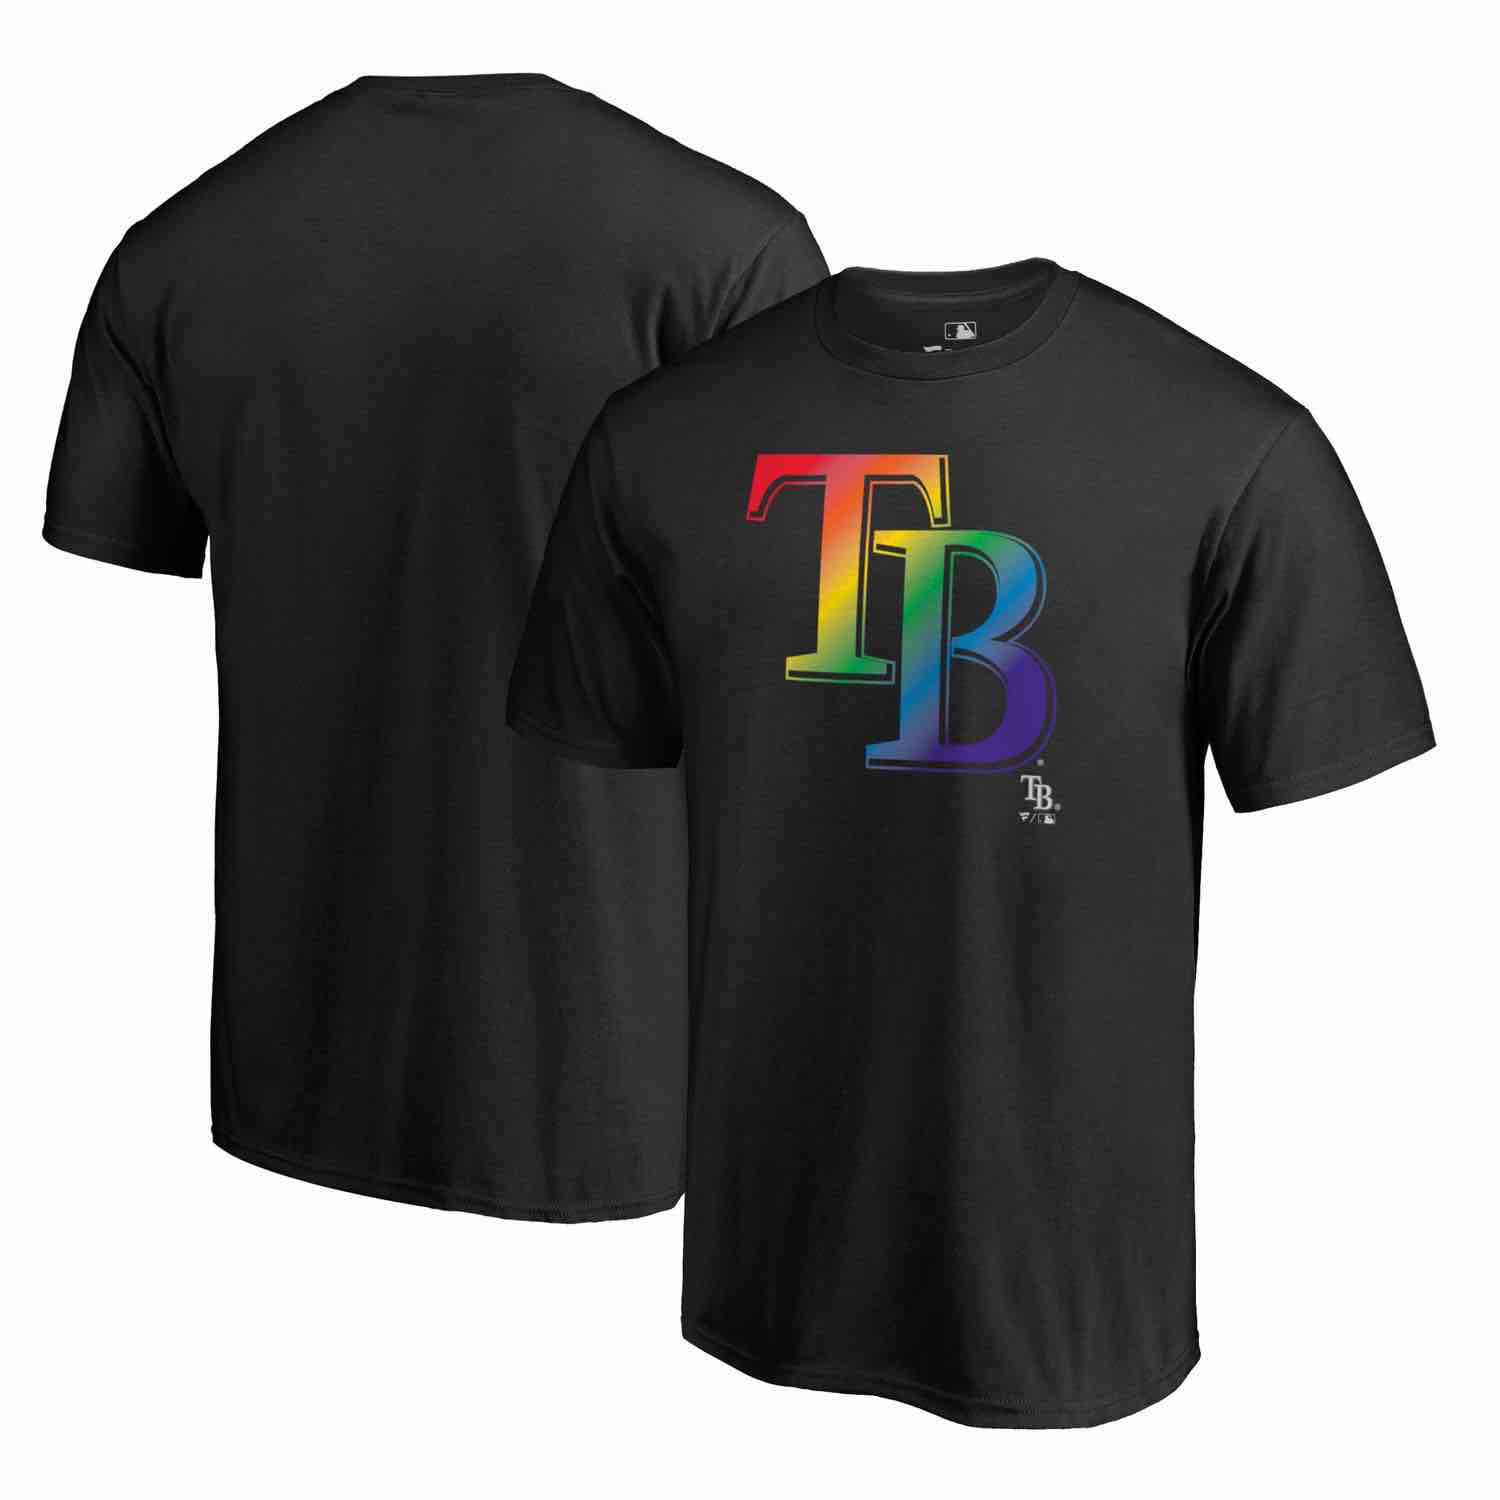 Mens Tampa Bay Rays Fanatics Branded Pride Black T-Shirt